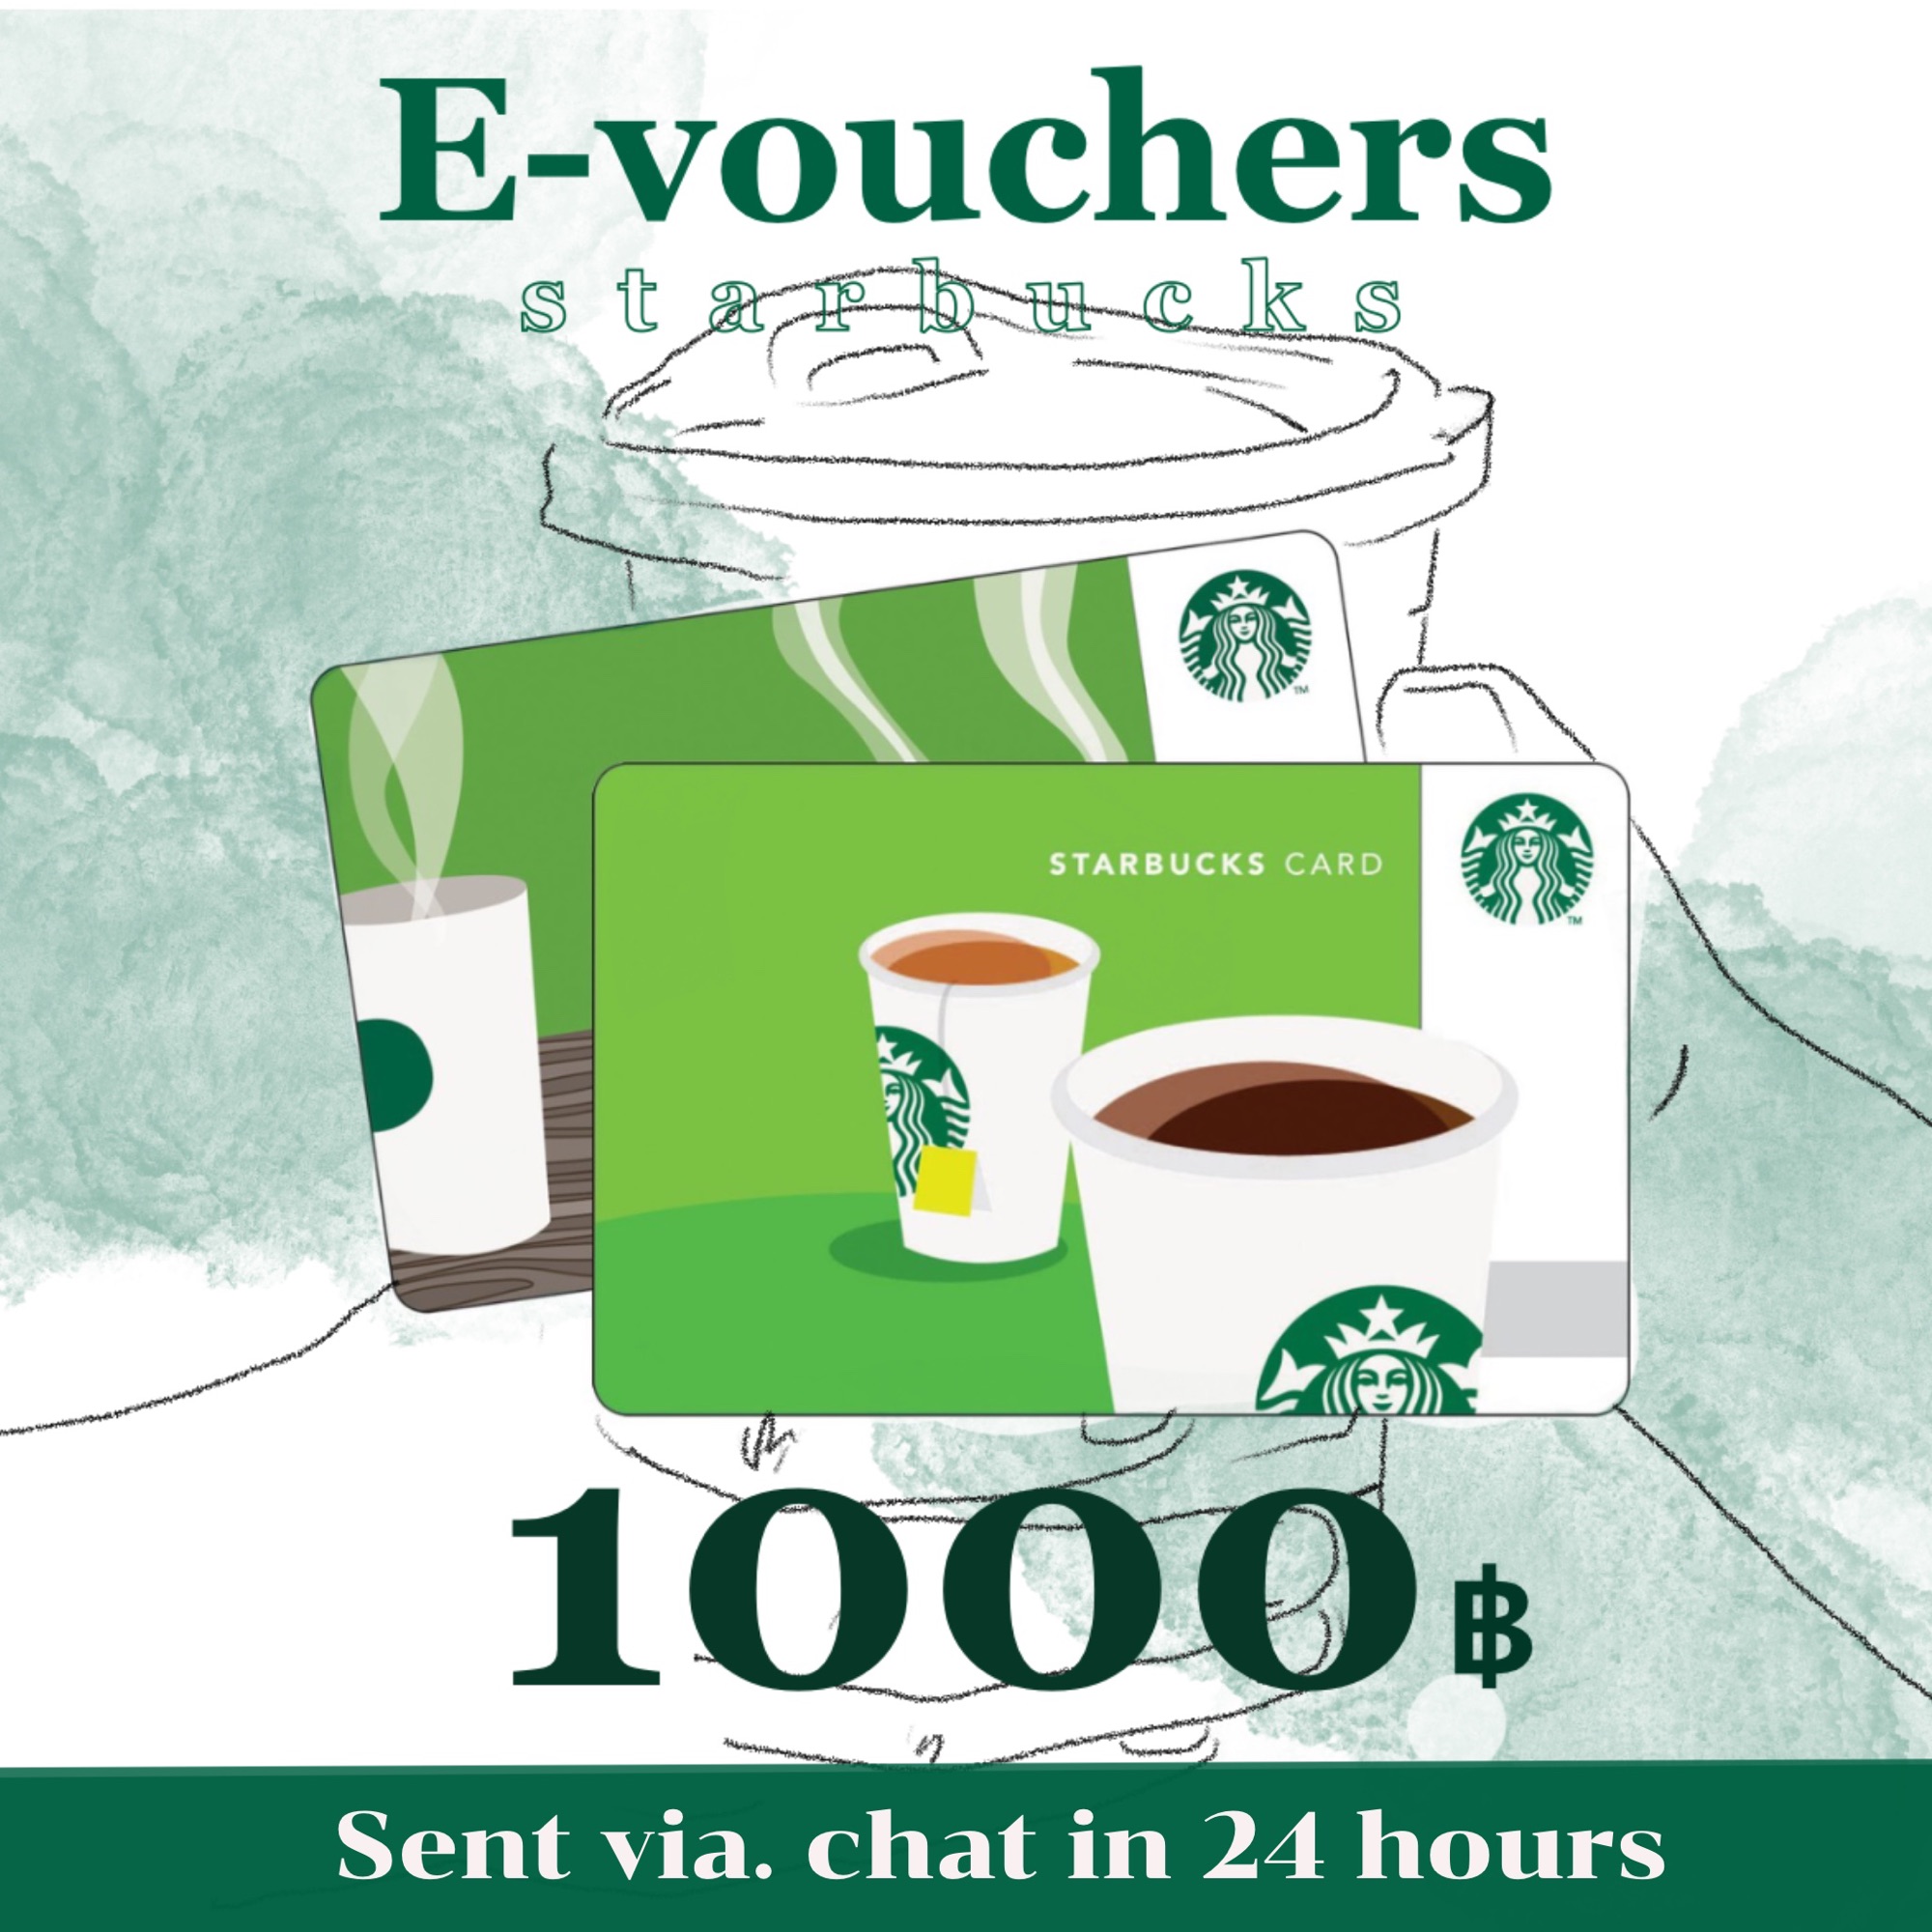 Starbucks Card(E-Voucher)**ส่งโค้ด**บัตรสตาร์บักส์ มูลค่า1000 บาท